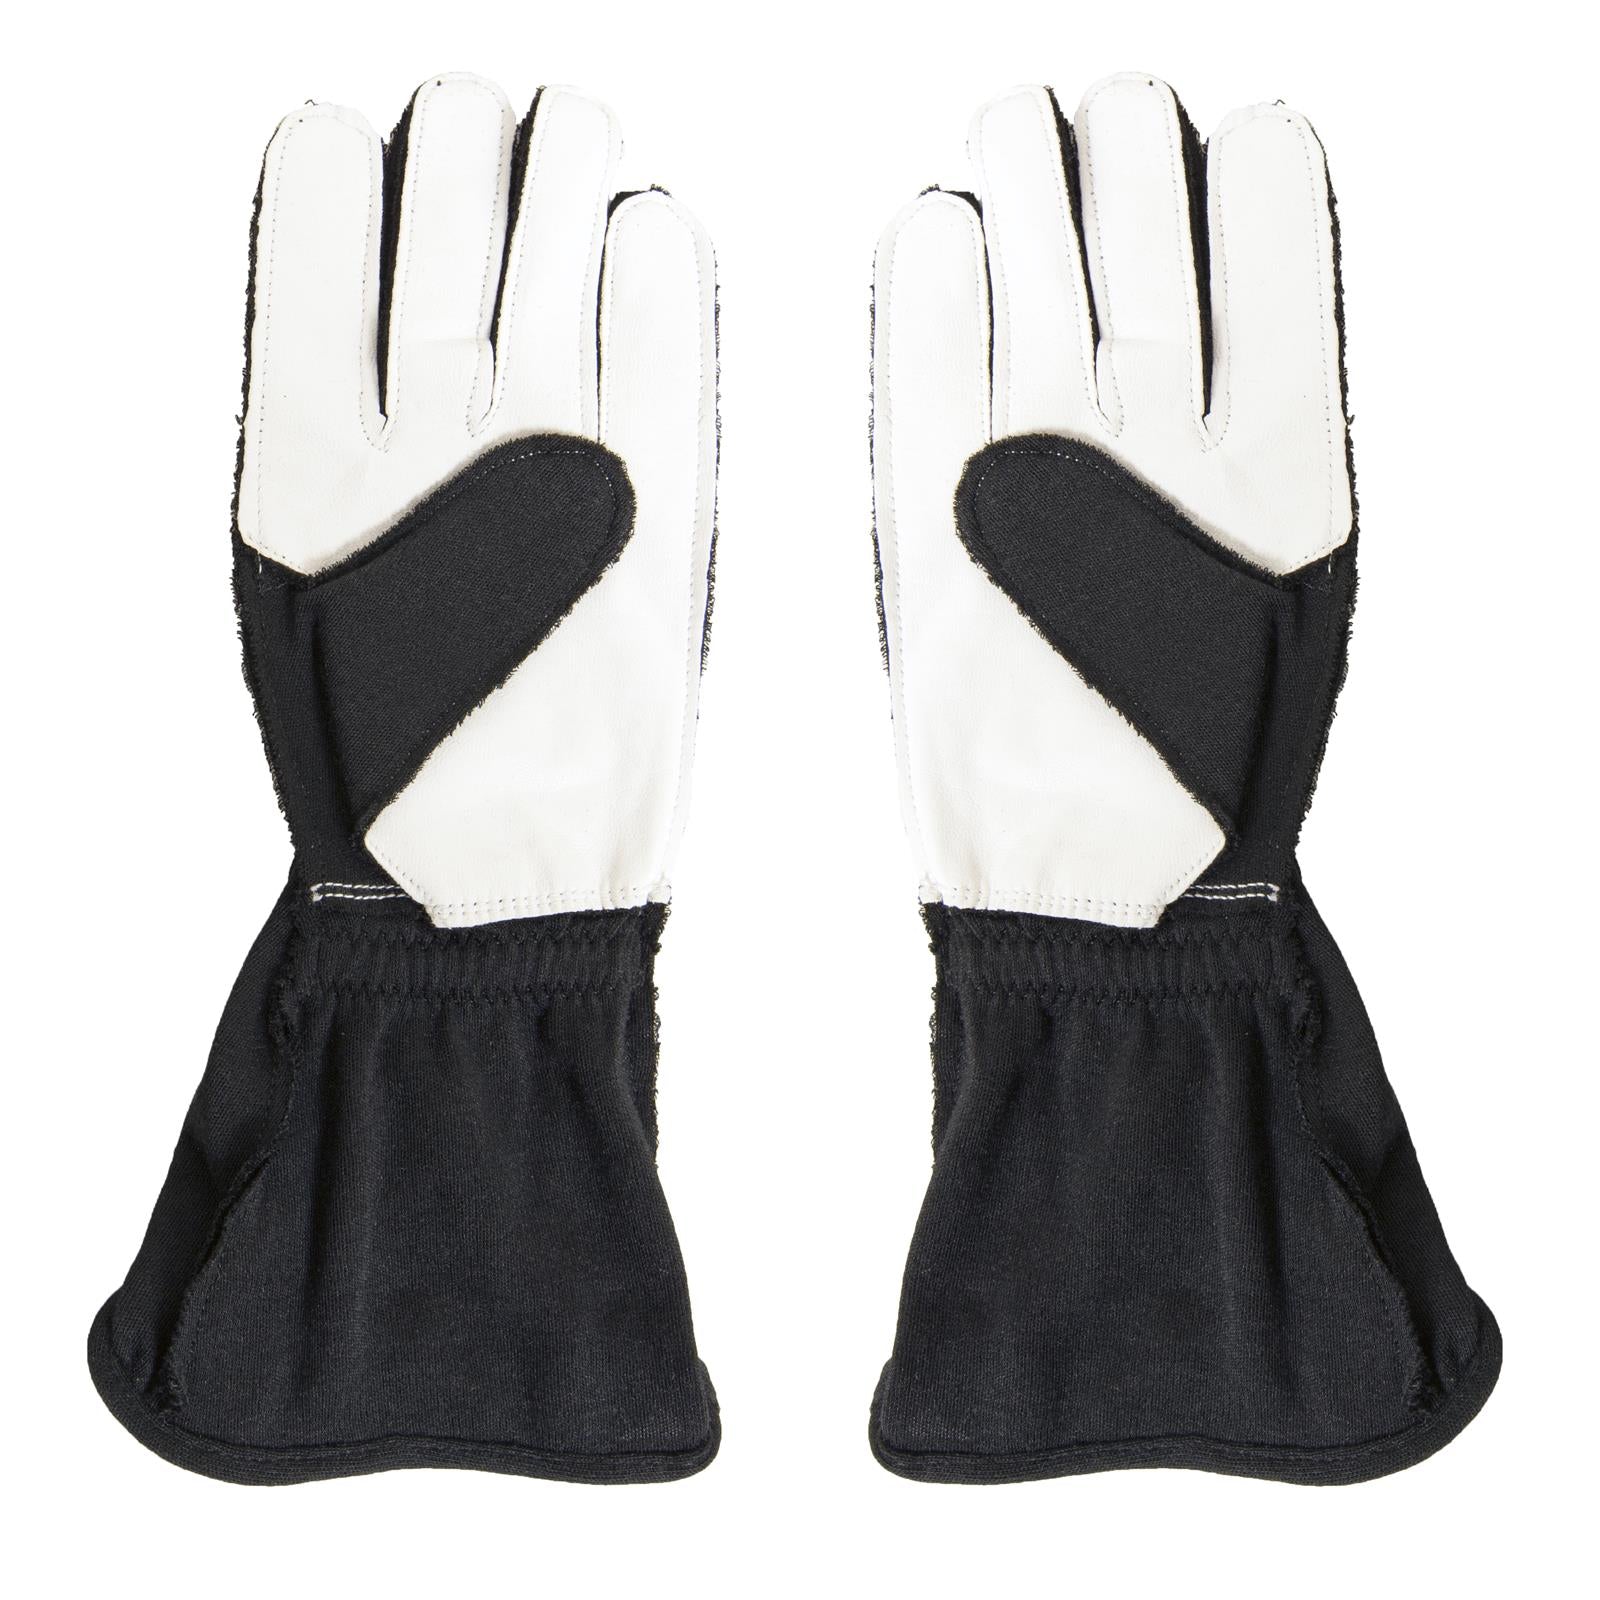 Super Sport Gloves